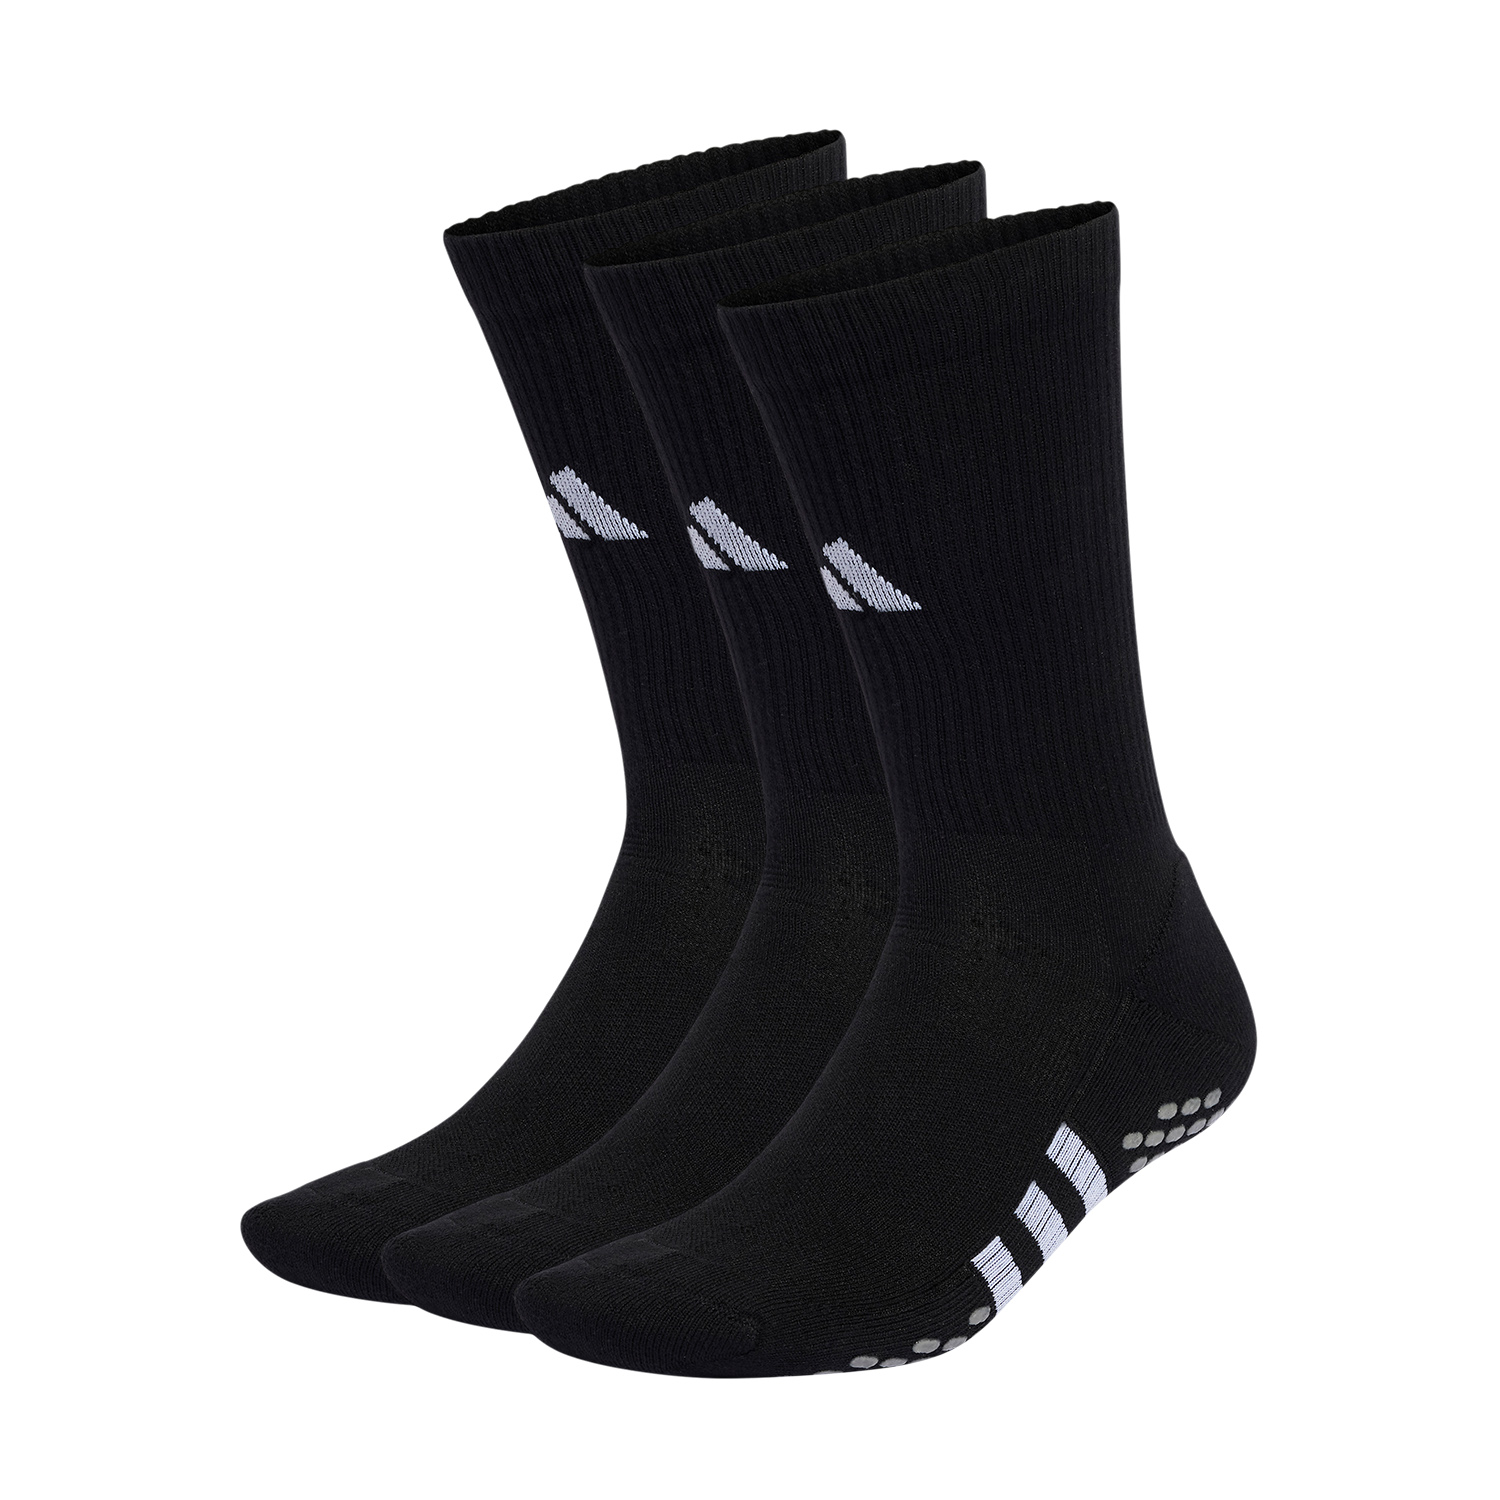 Performance AEROREADY x 3 Socks - Black/White